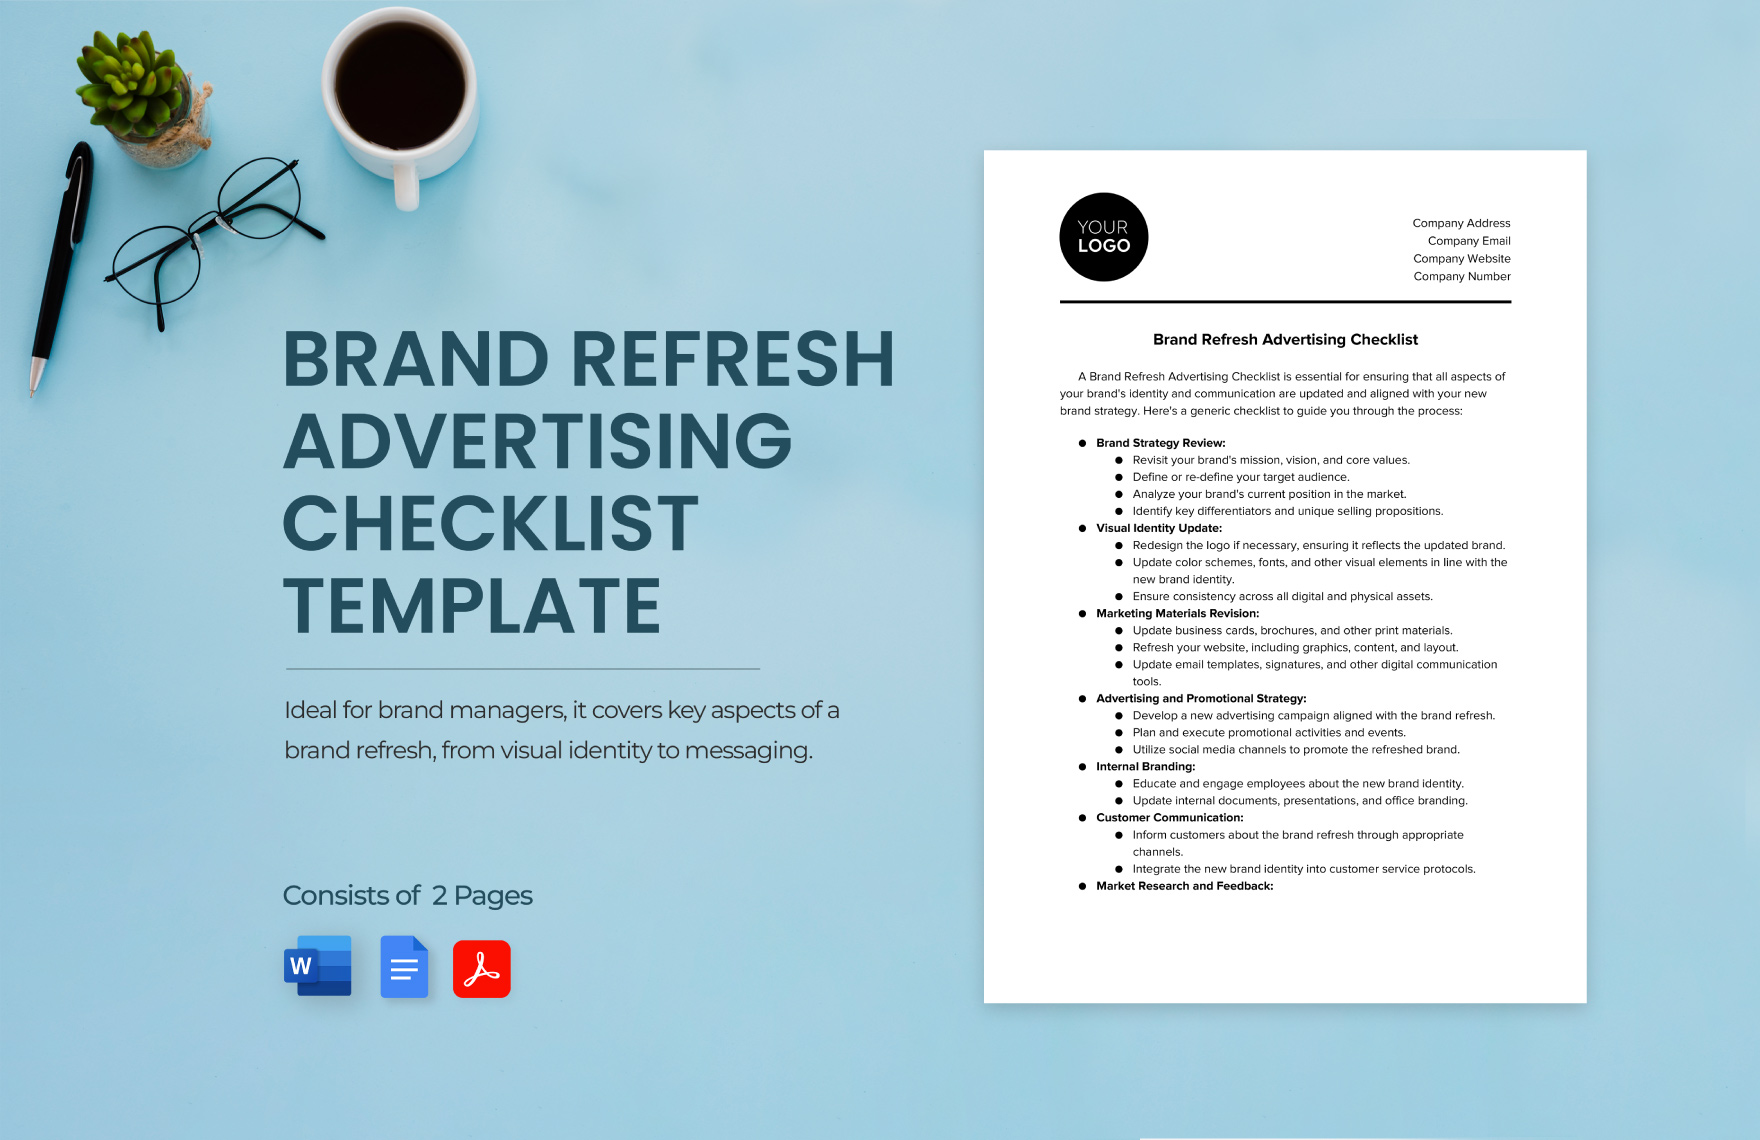 Brand Refresh Advertising Checklist Template in Word, Google Docs, PDF